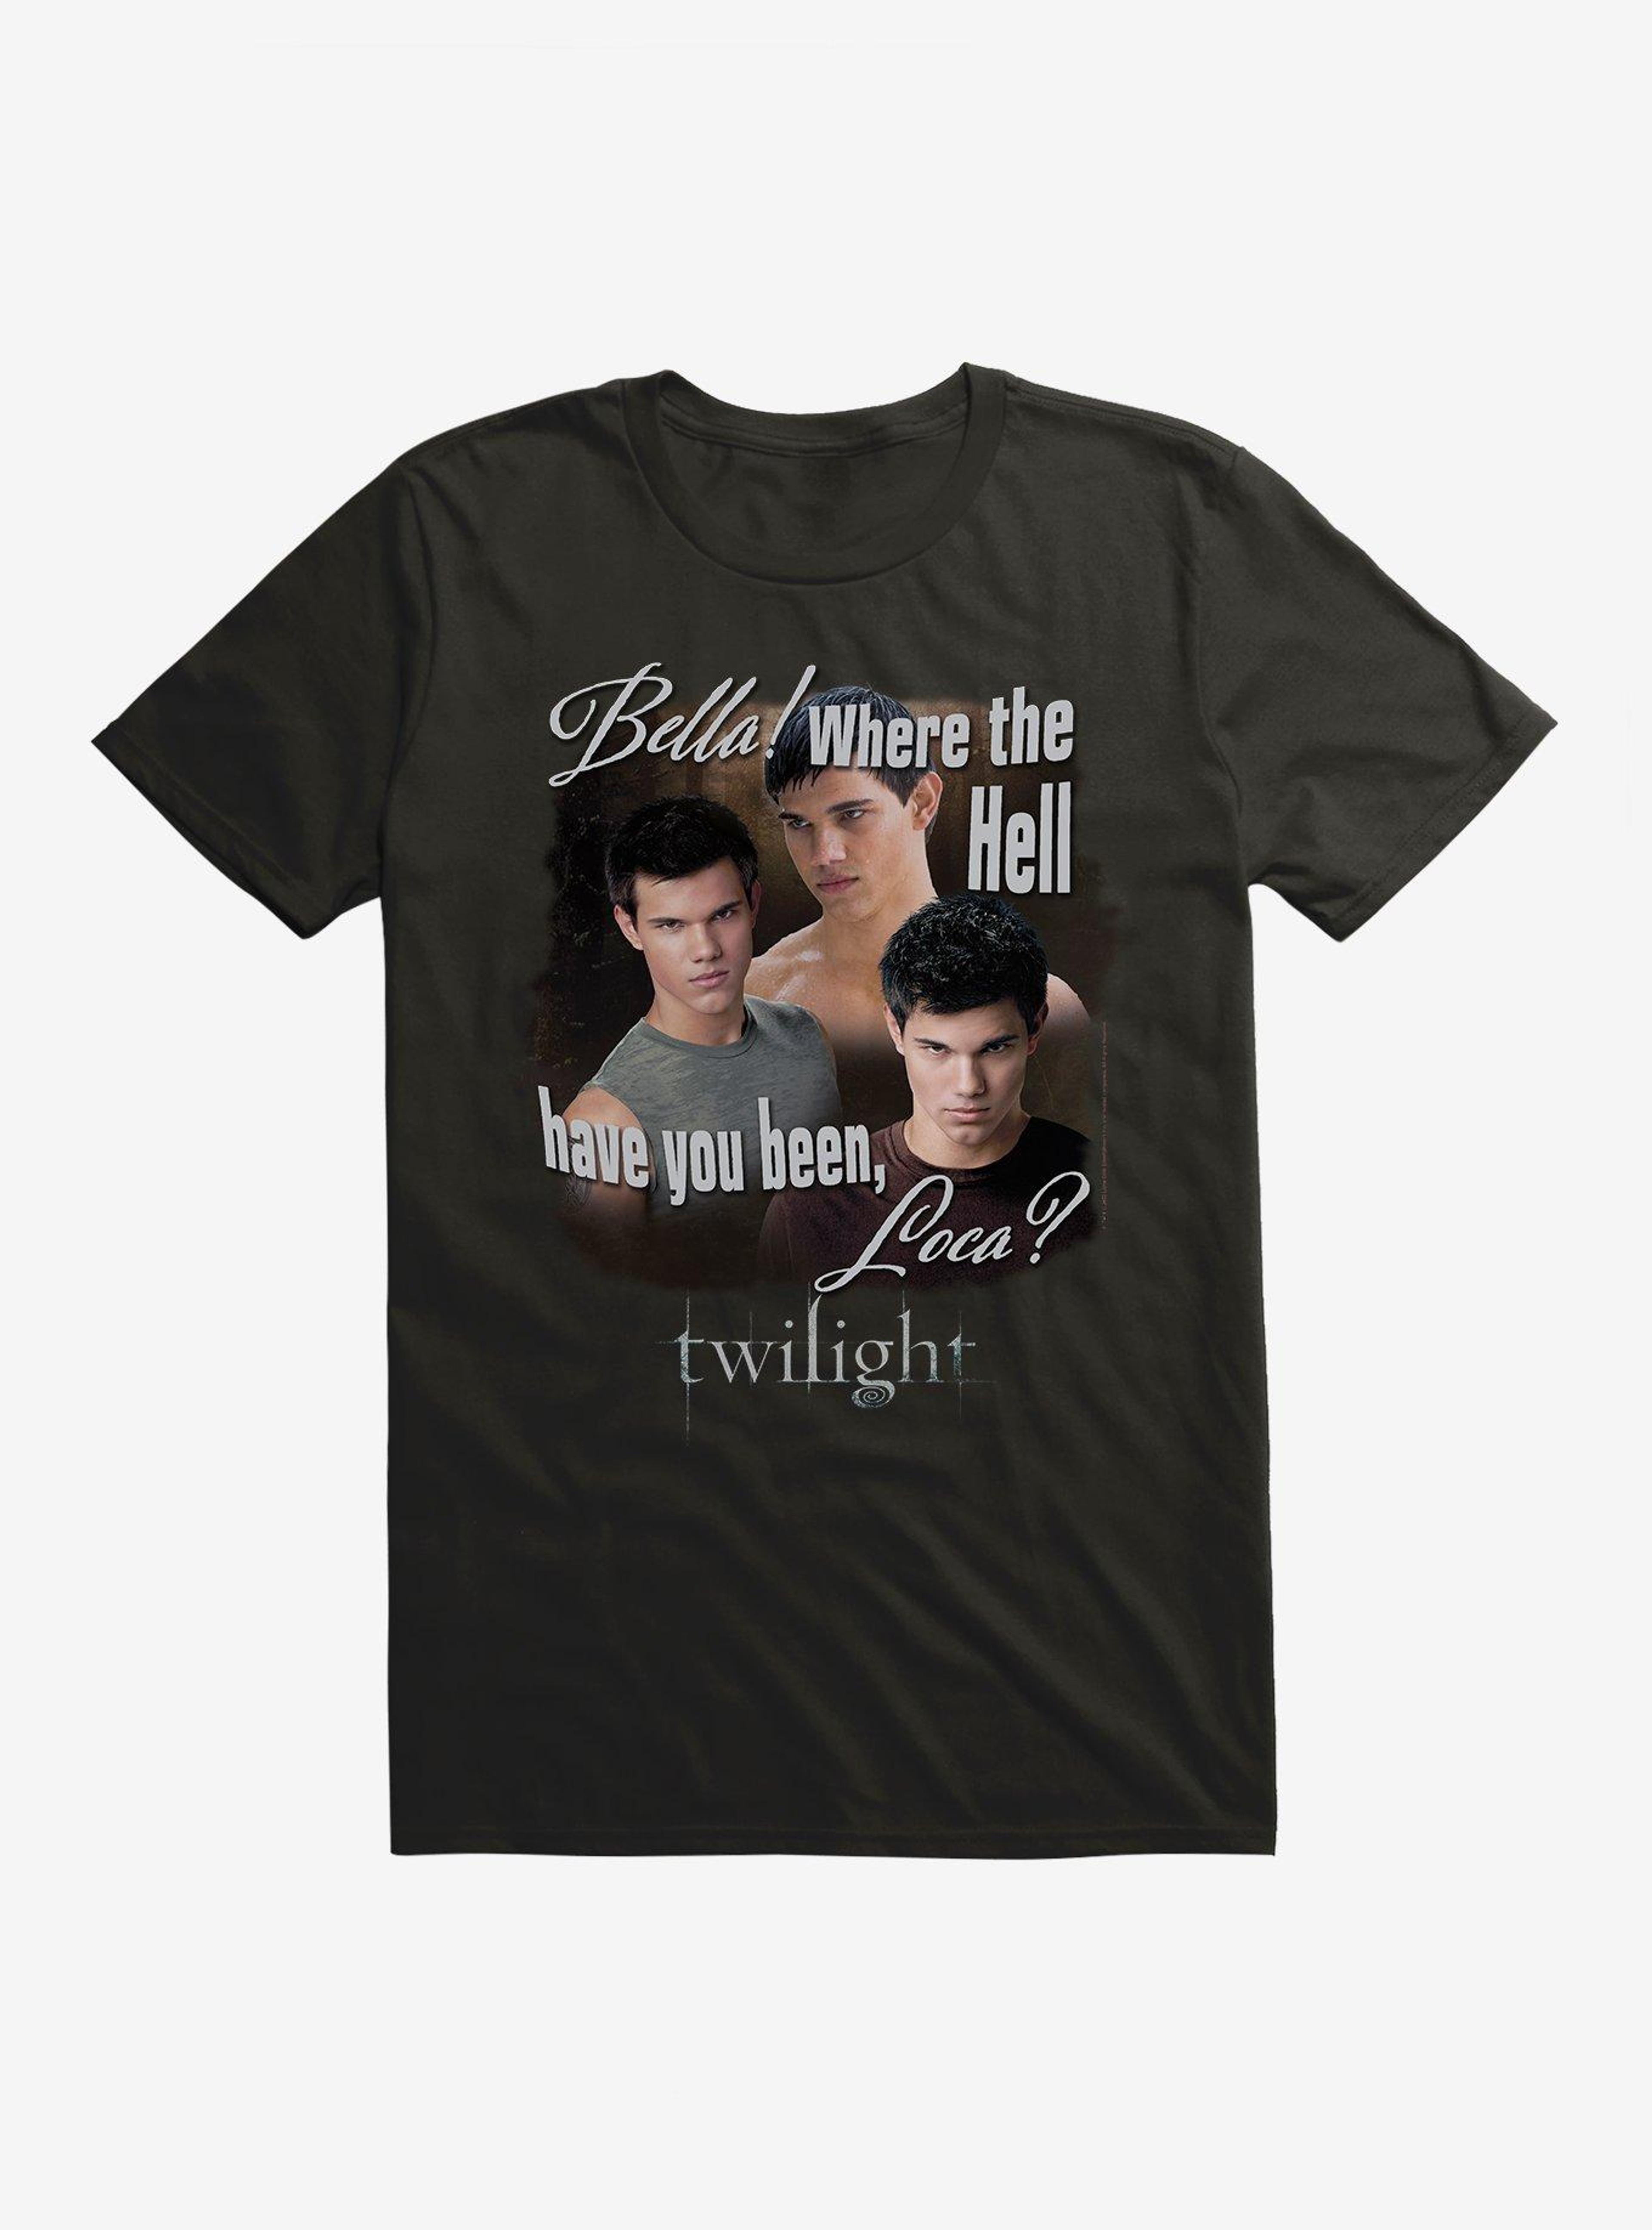 Twilight Jacob Where You Been Loca T-Shirt